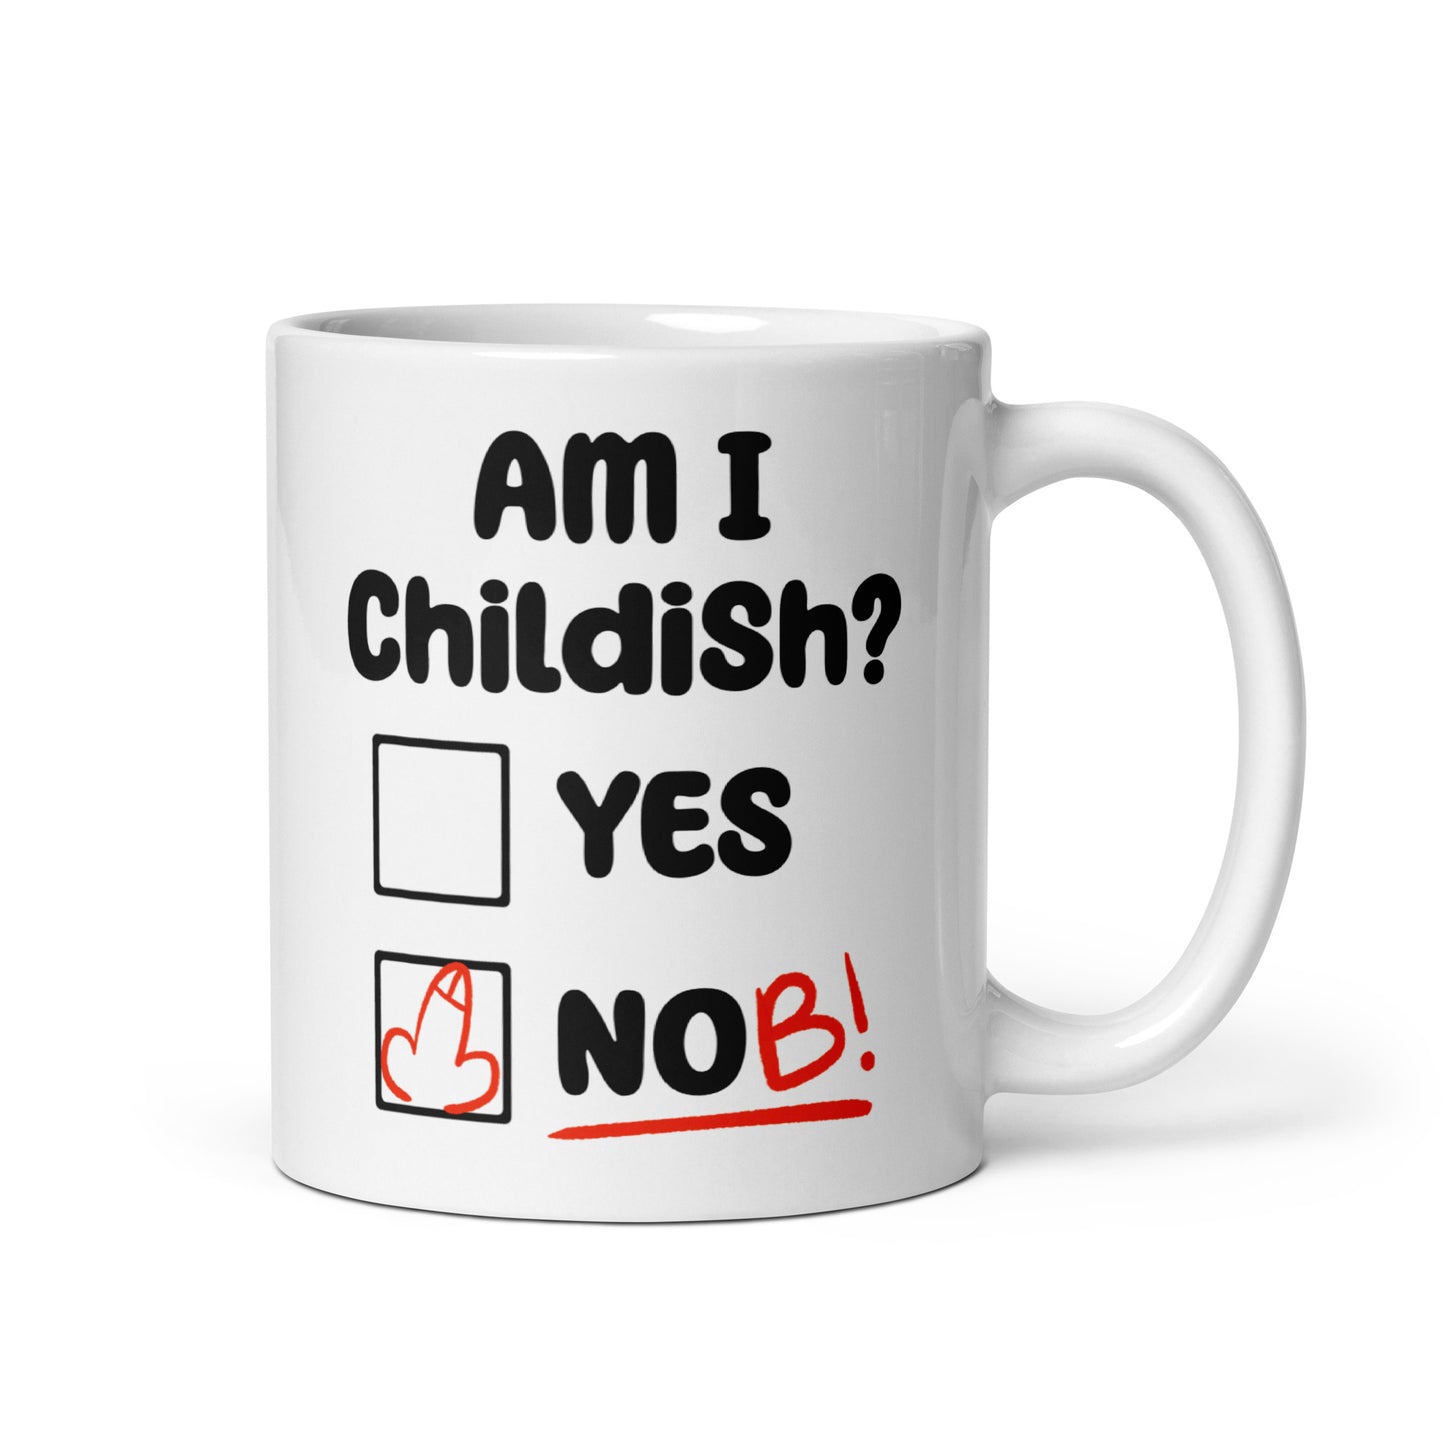 "Am I Childish?" Mug